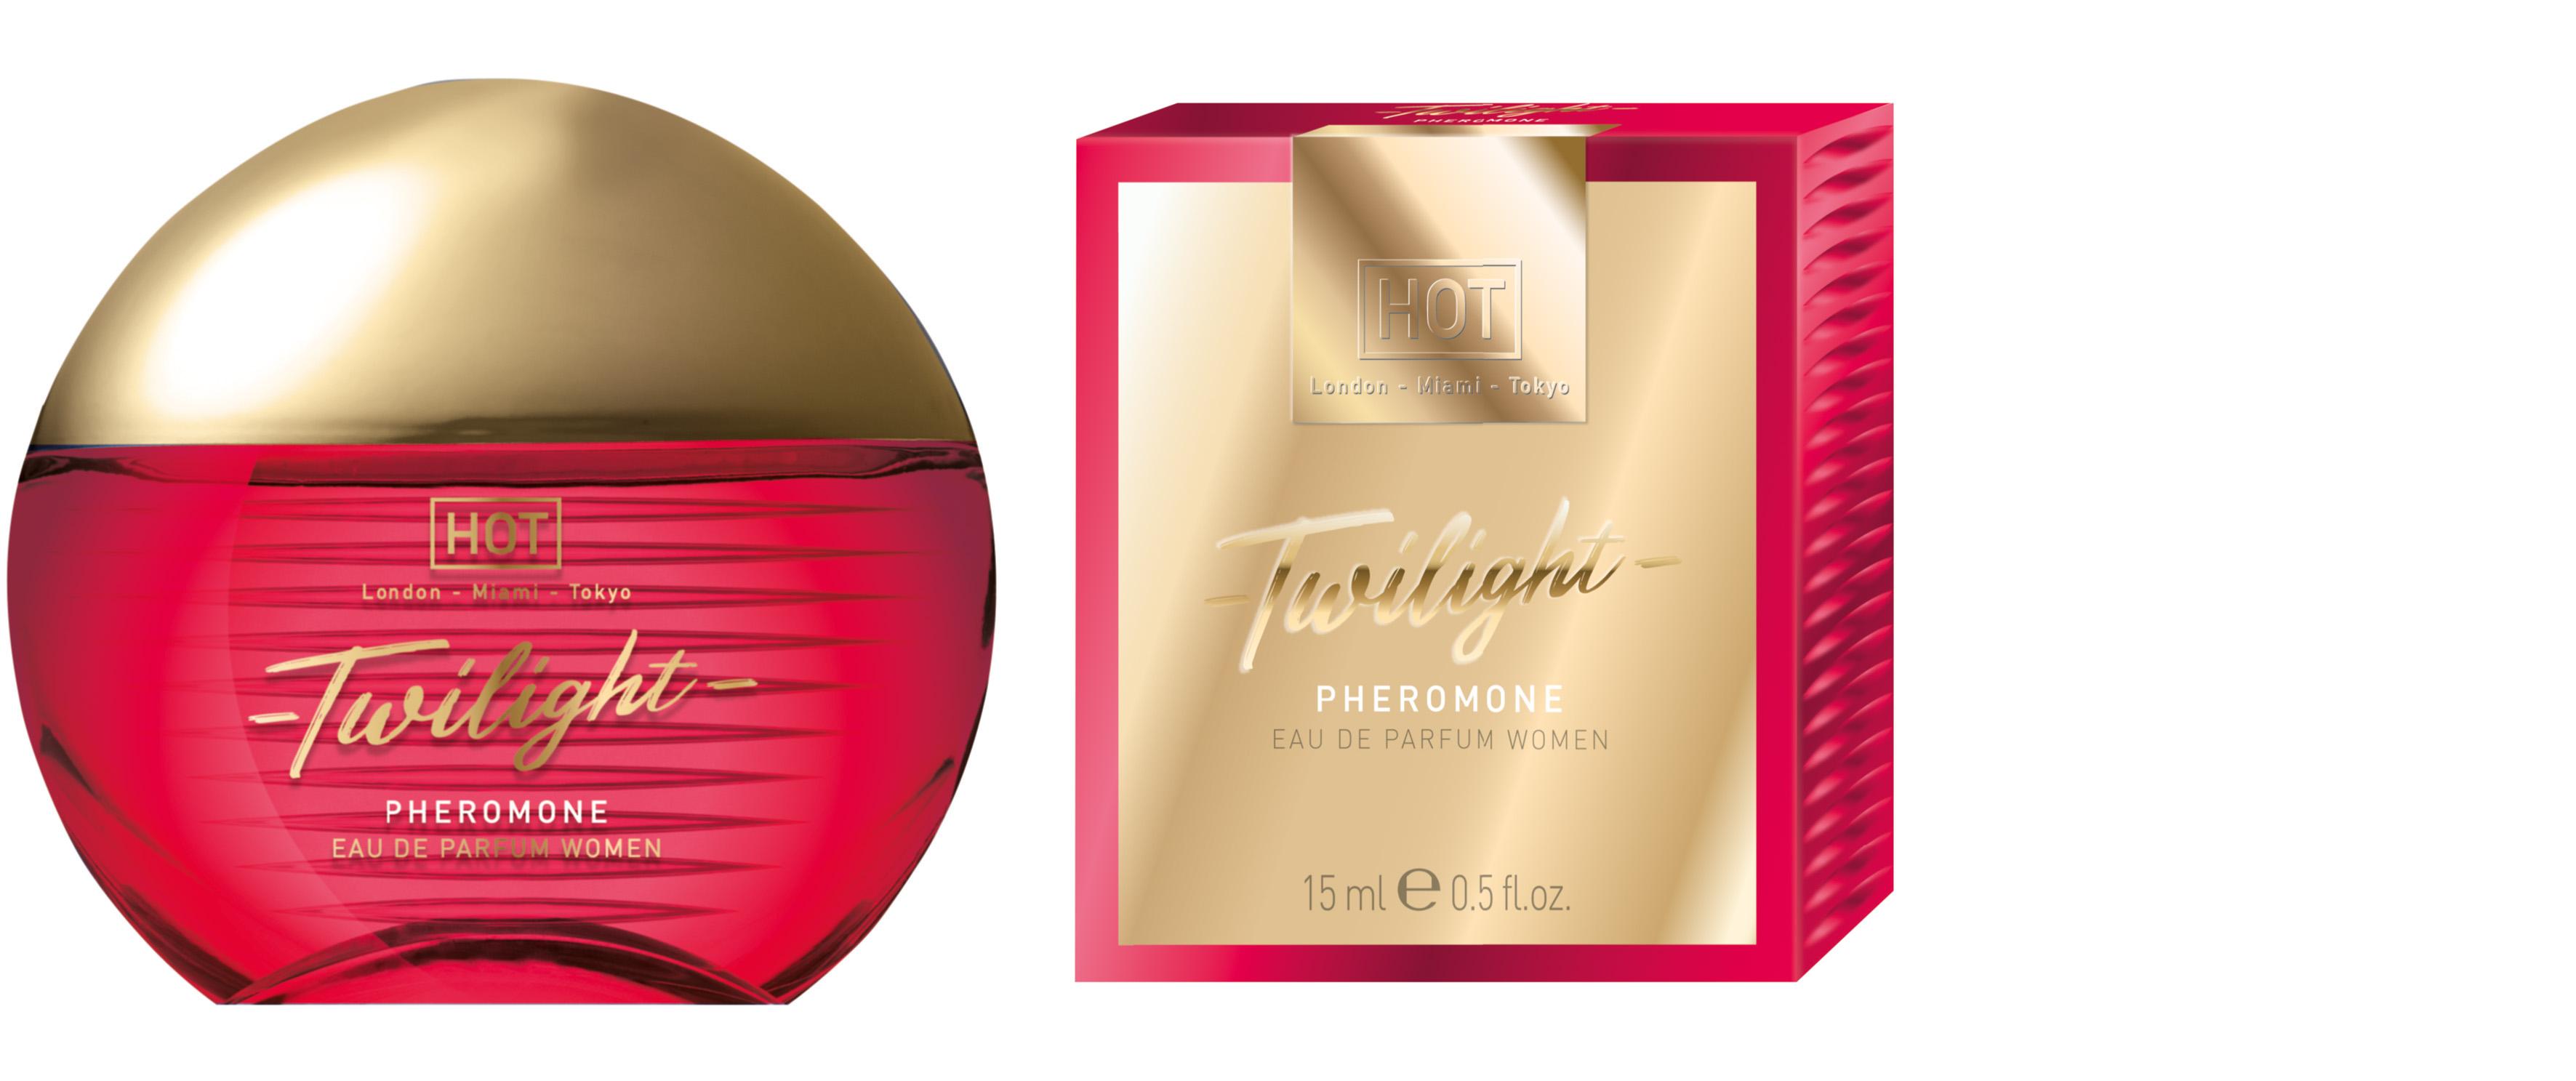  "HOT Twilight Pheromone Parfum women 15ml"